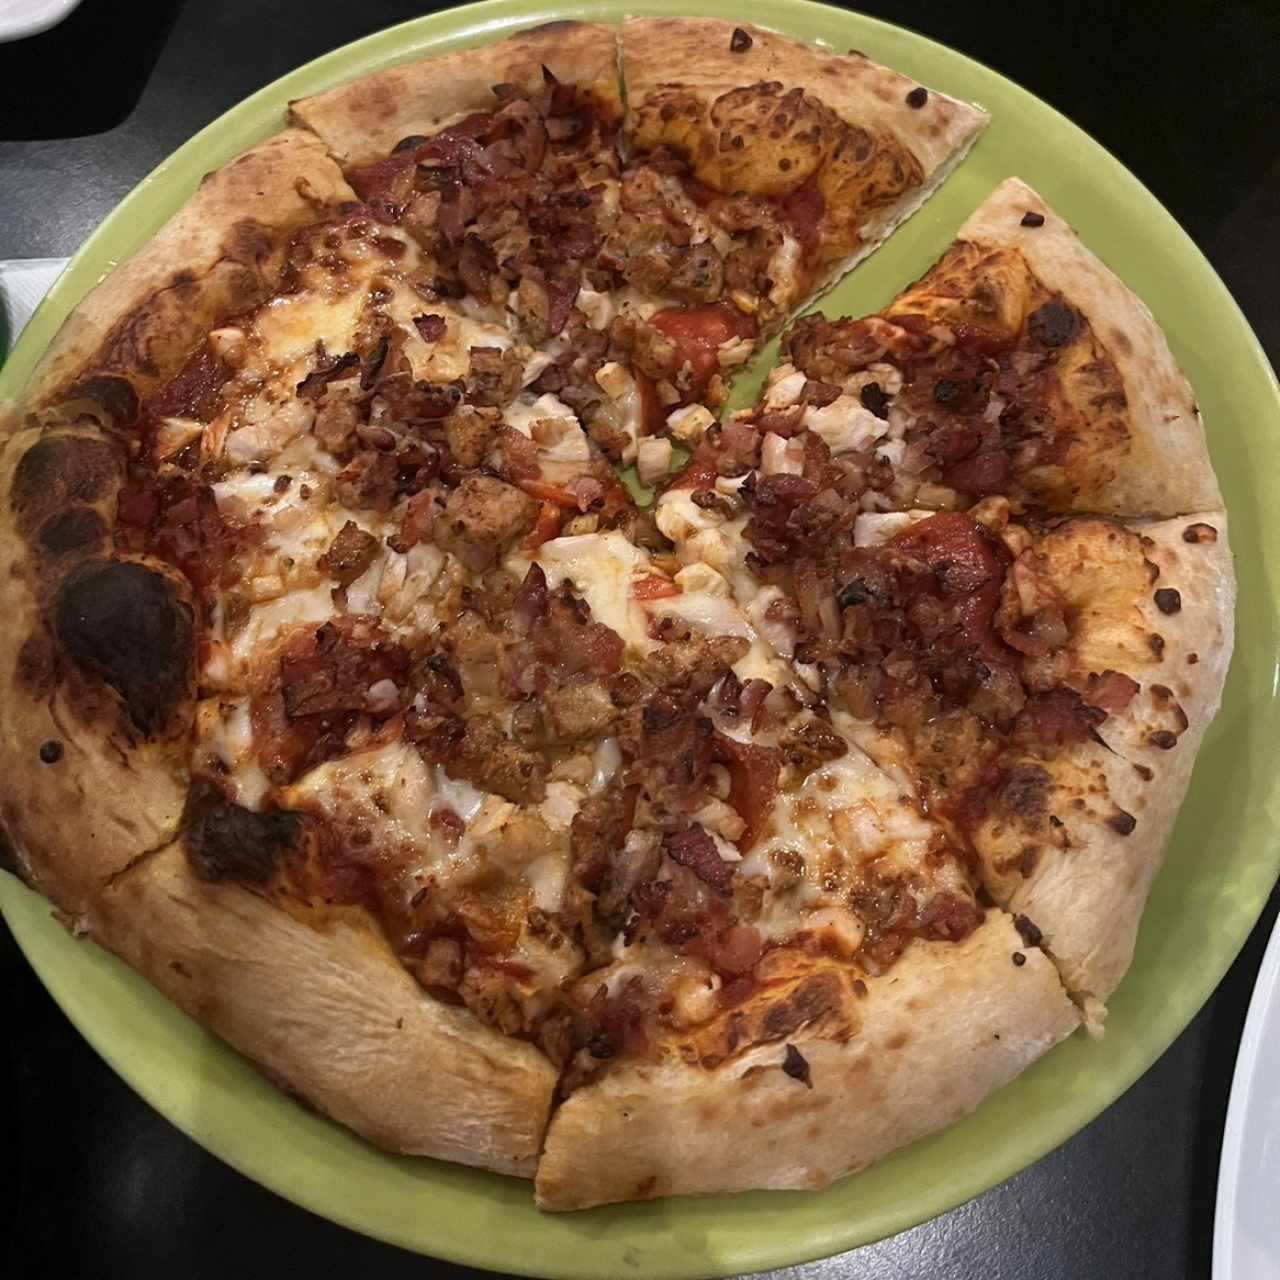 Pizza 12" - Crispy bacon